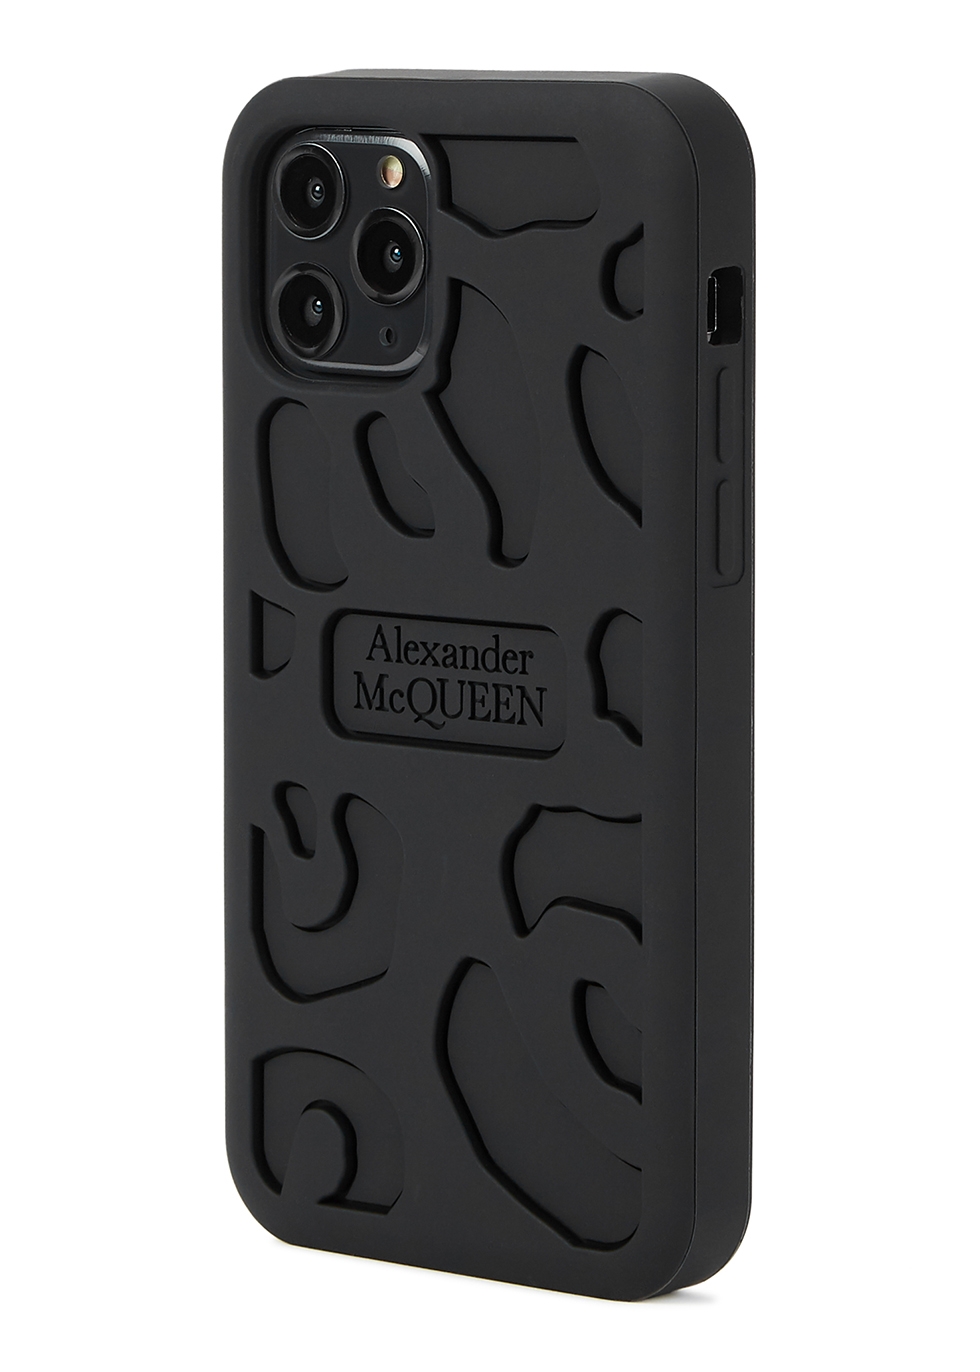 Alexander McQueen Black silicone iPhone 